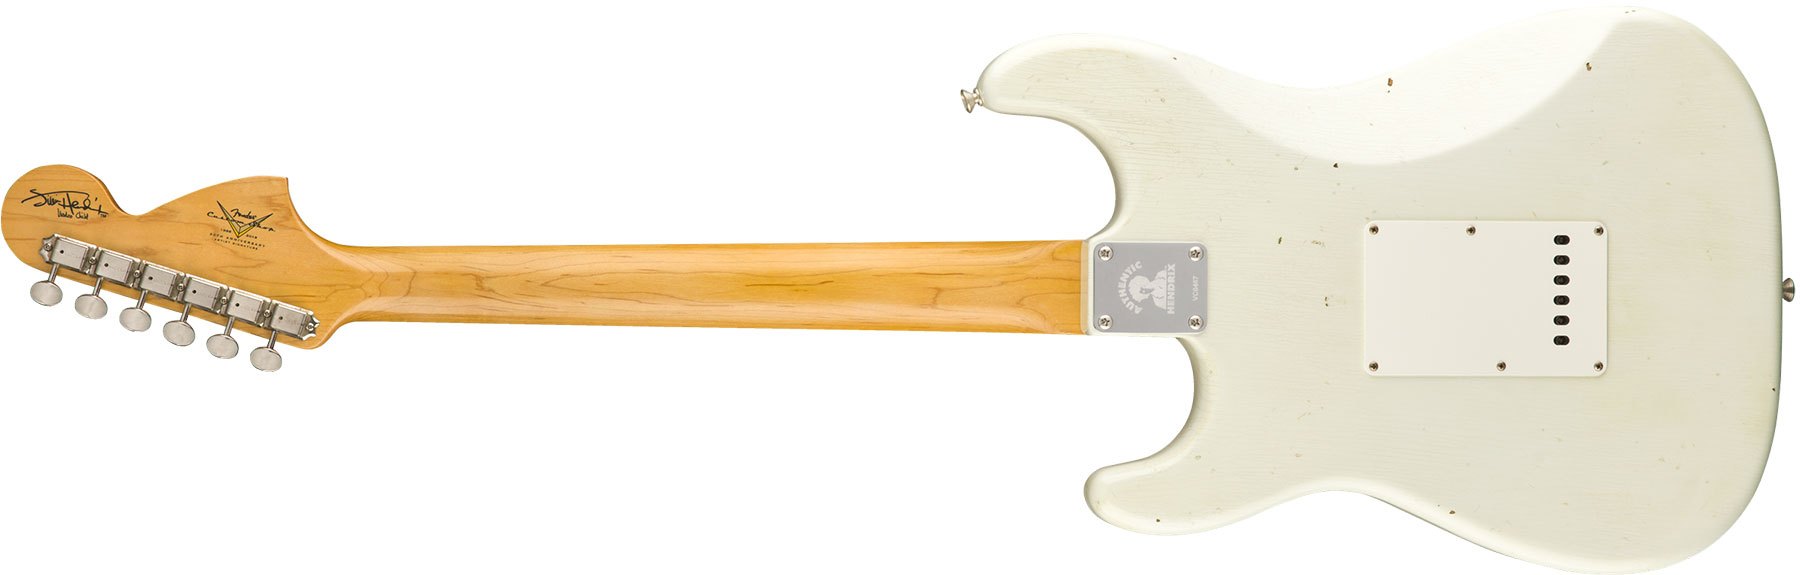 Fender Custom Shop Jimi Hendrix Strat Voodoo Child Signature 2018 Mn - Journeyman Relic Olympic White - Str shape electric guitar - Variation 1